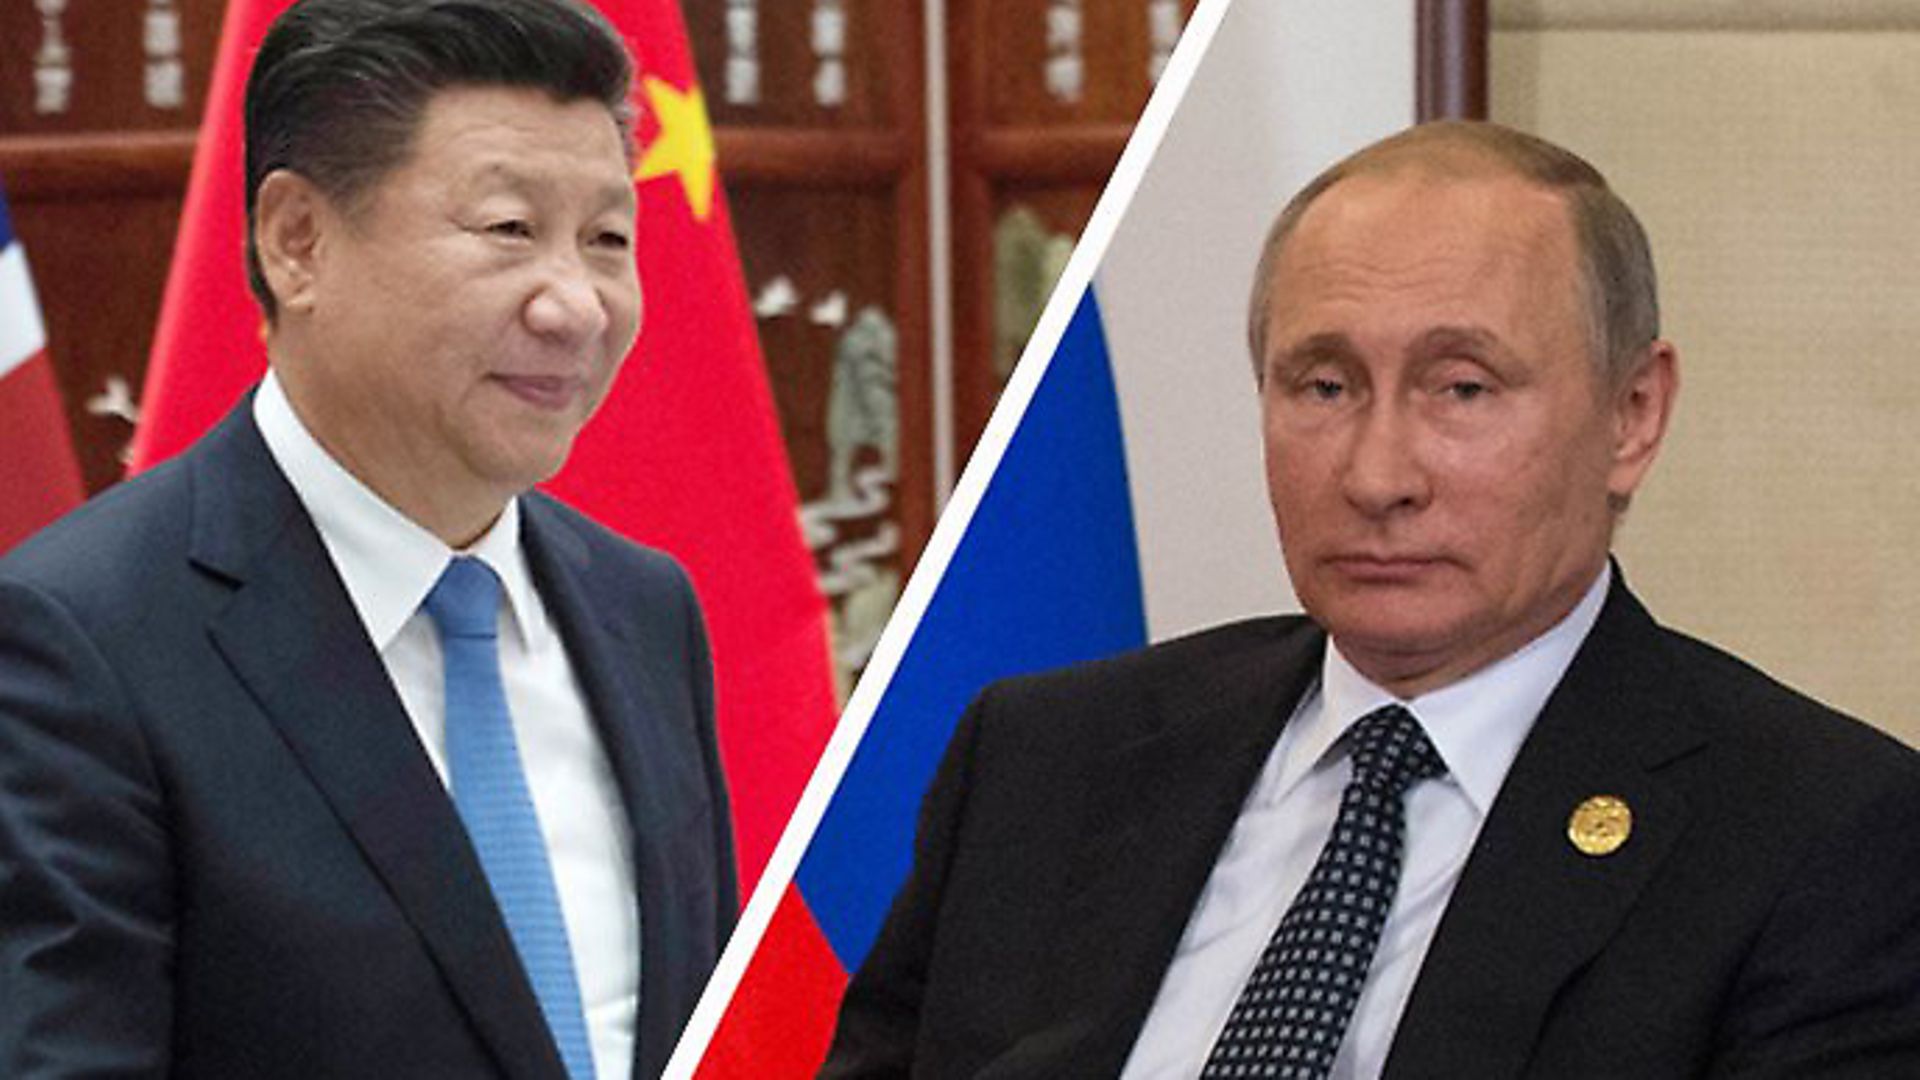 Chinese President Xi Jinping and Russian President Vladimir Putin - Credit: Archant